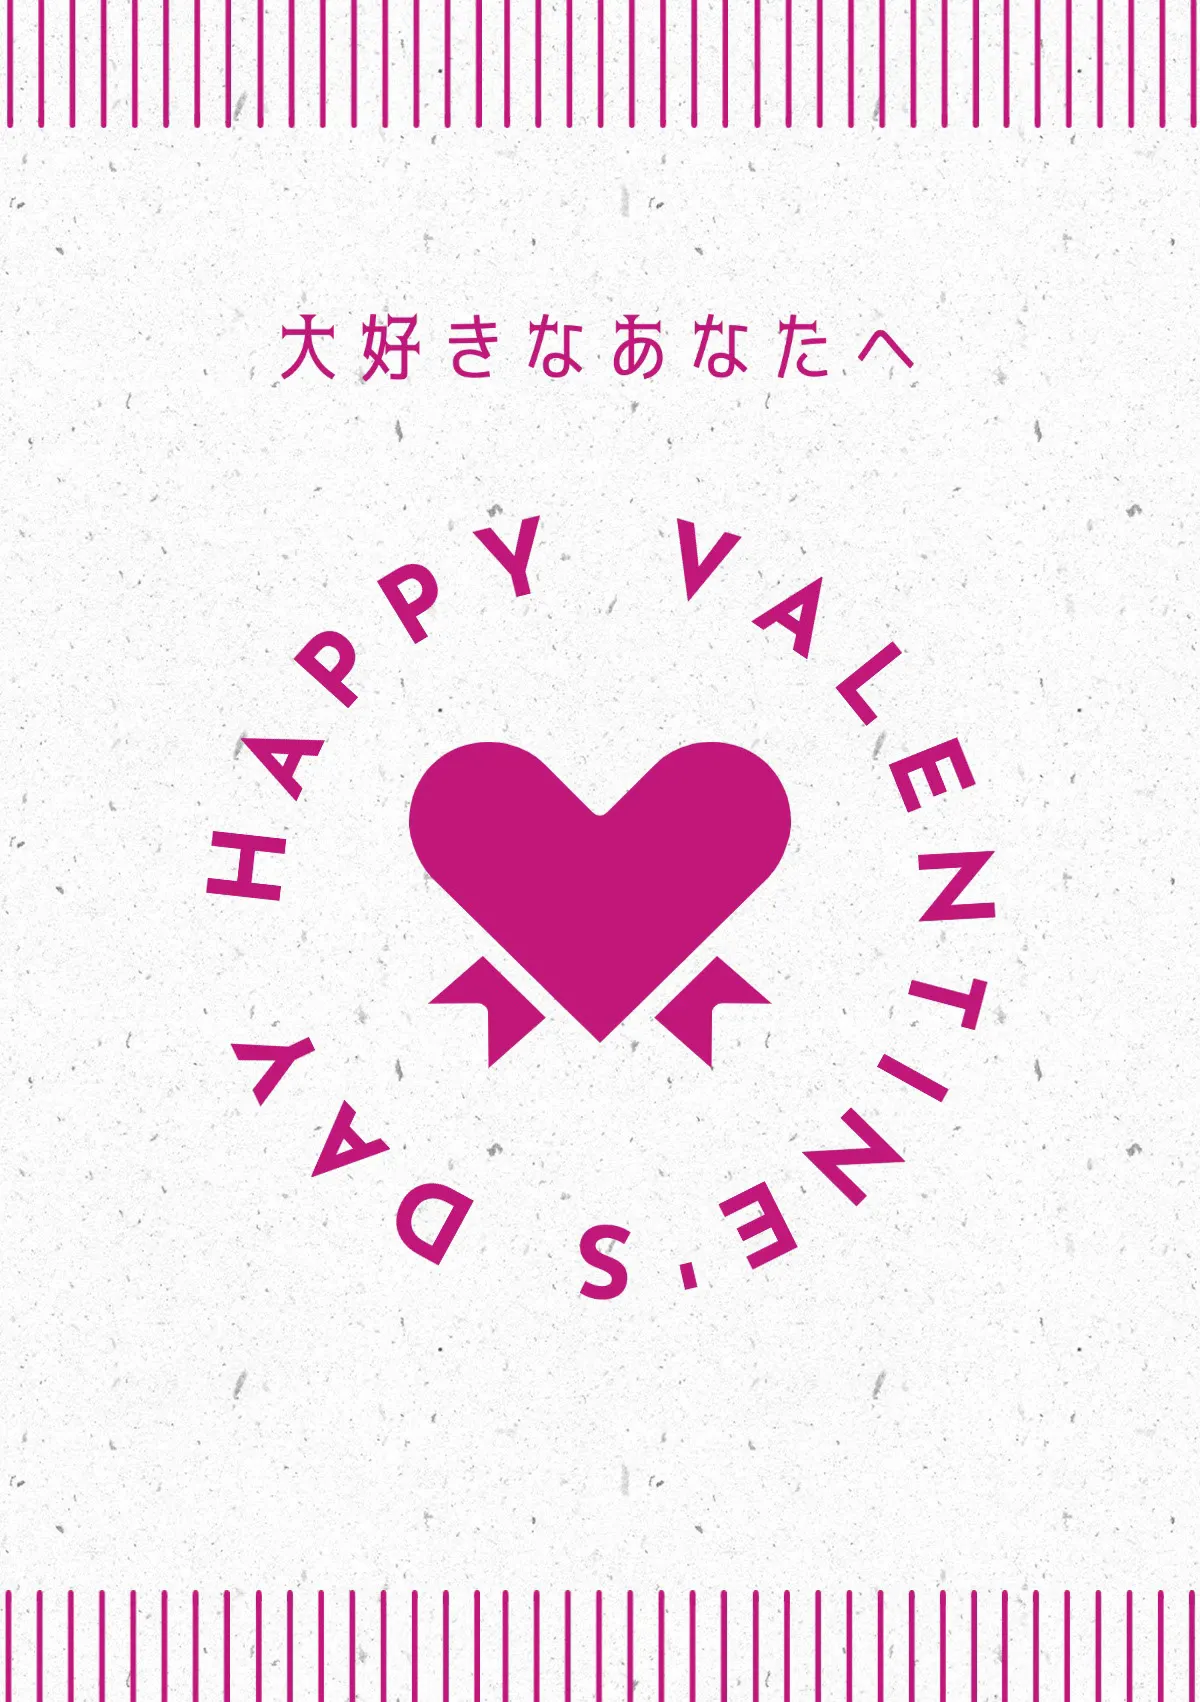 Vivid pink heart Valentine's day card